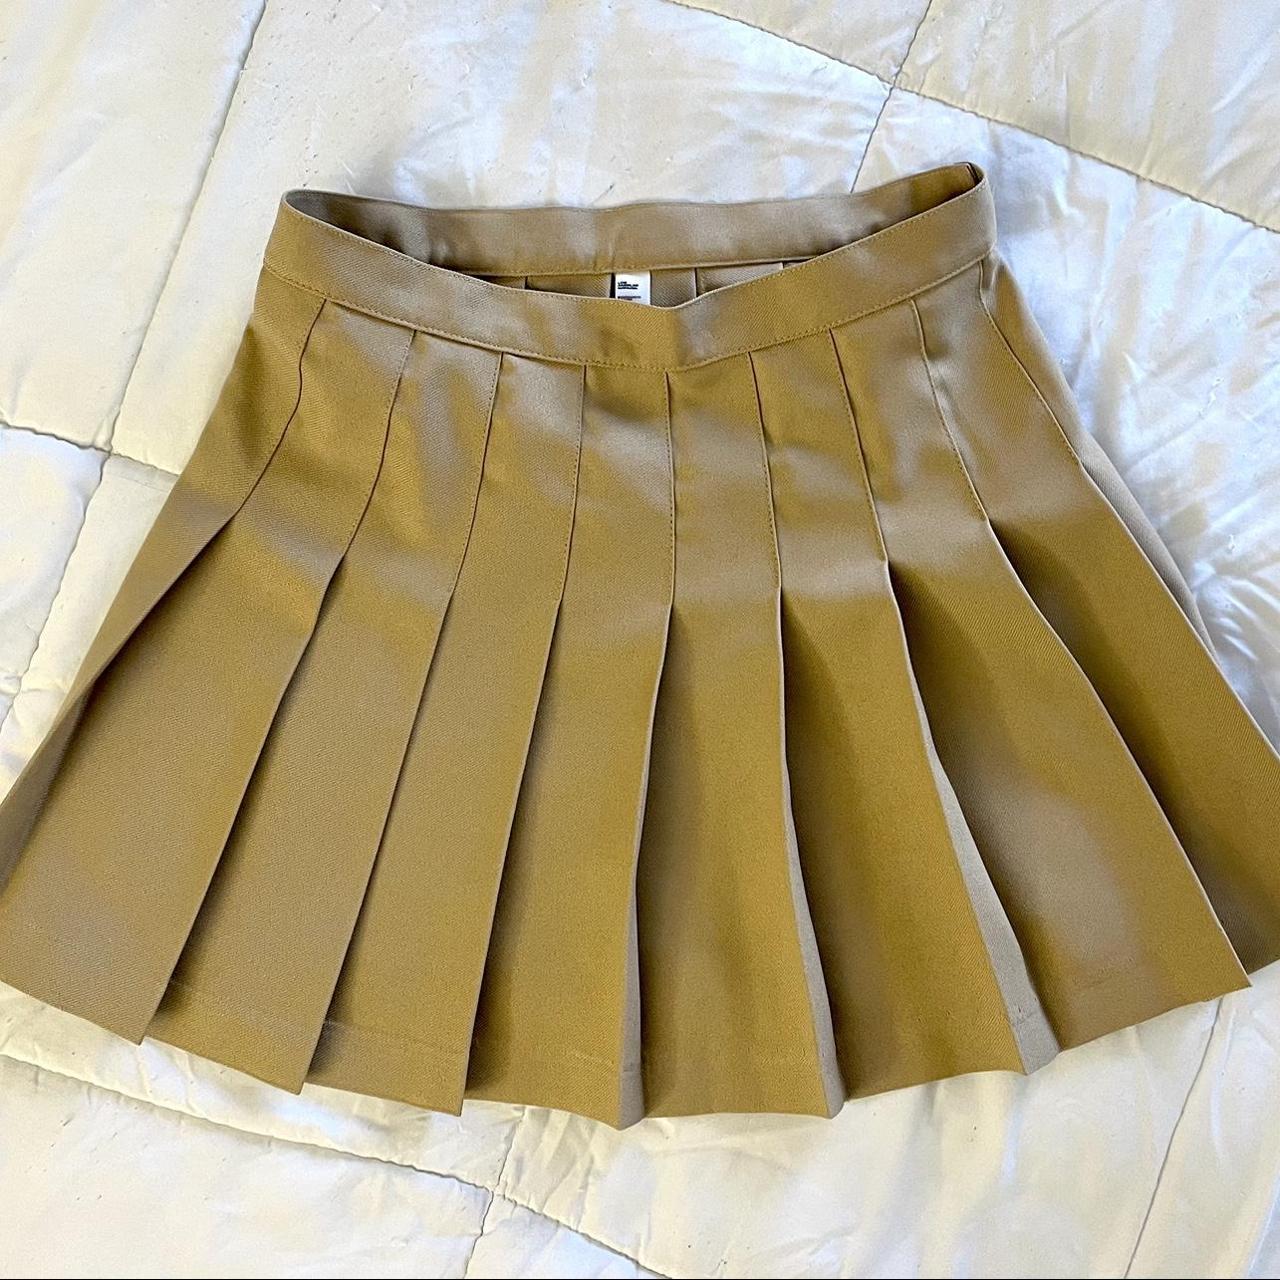 American Apparel Women's Tan Skirt